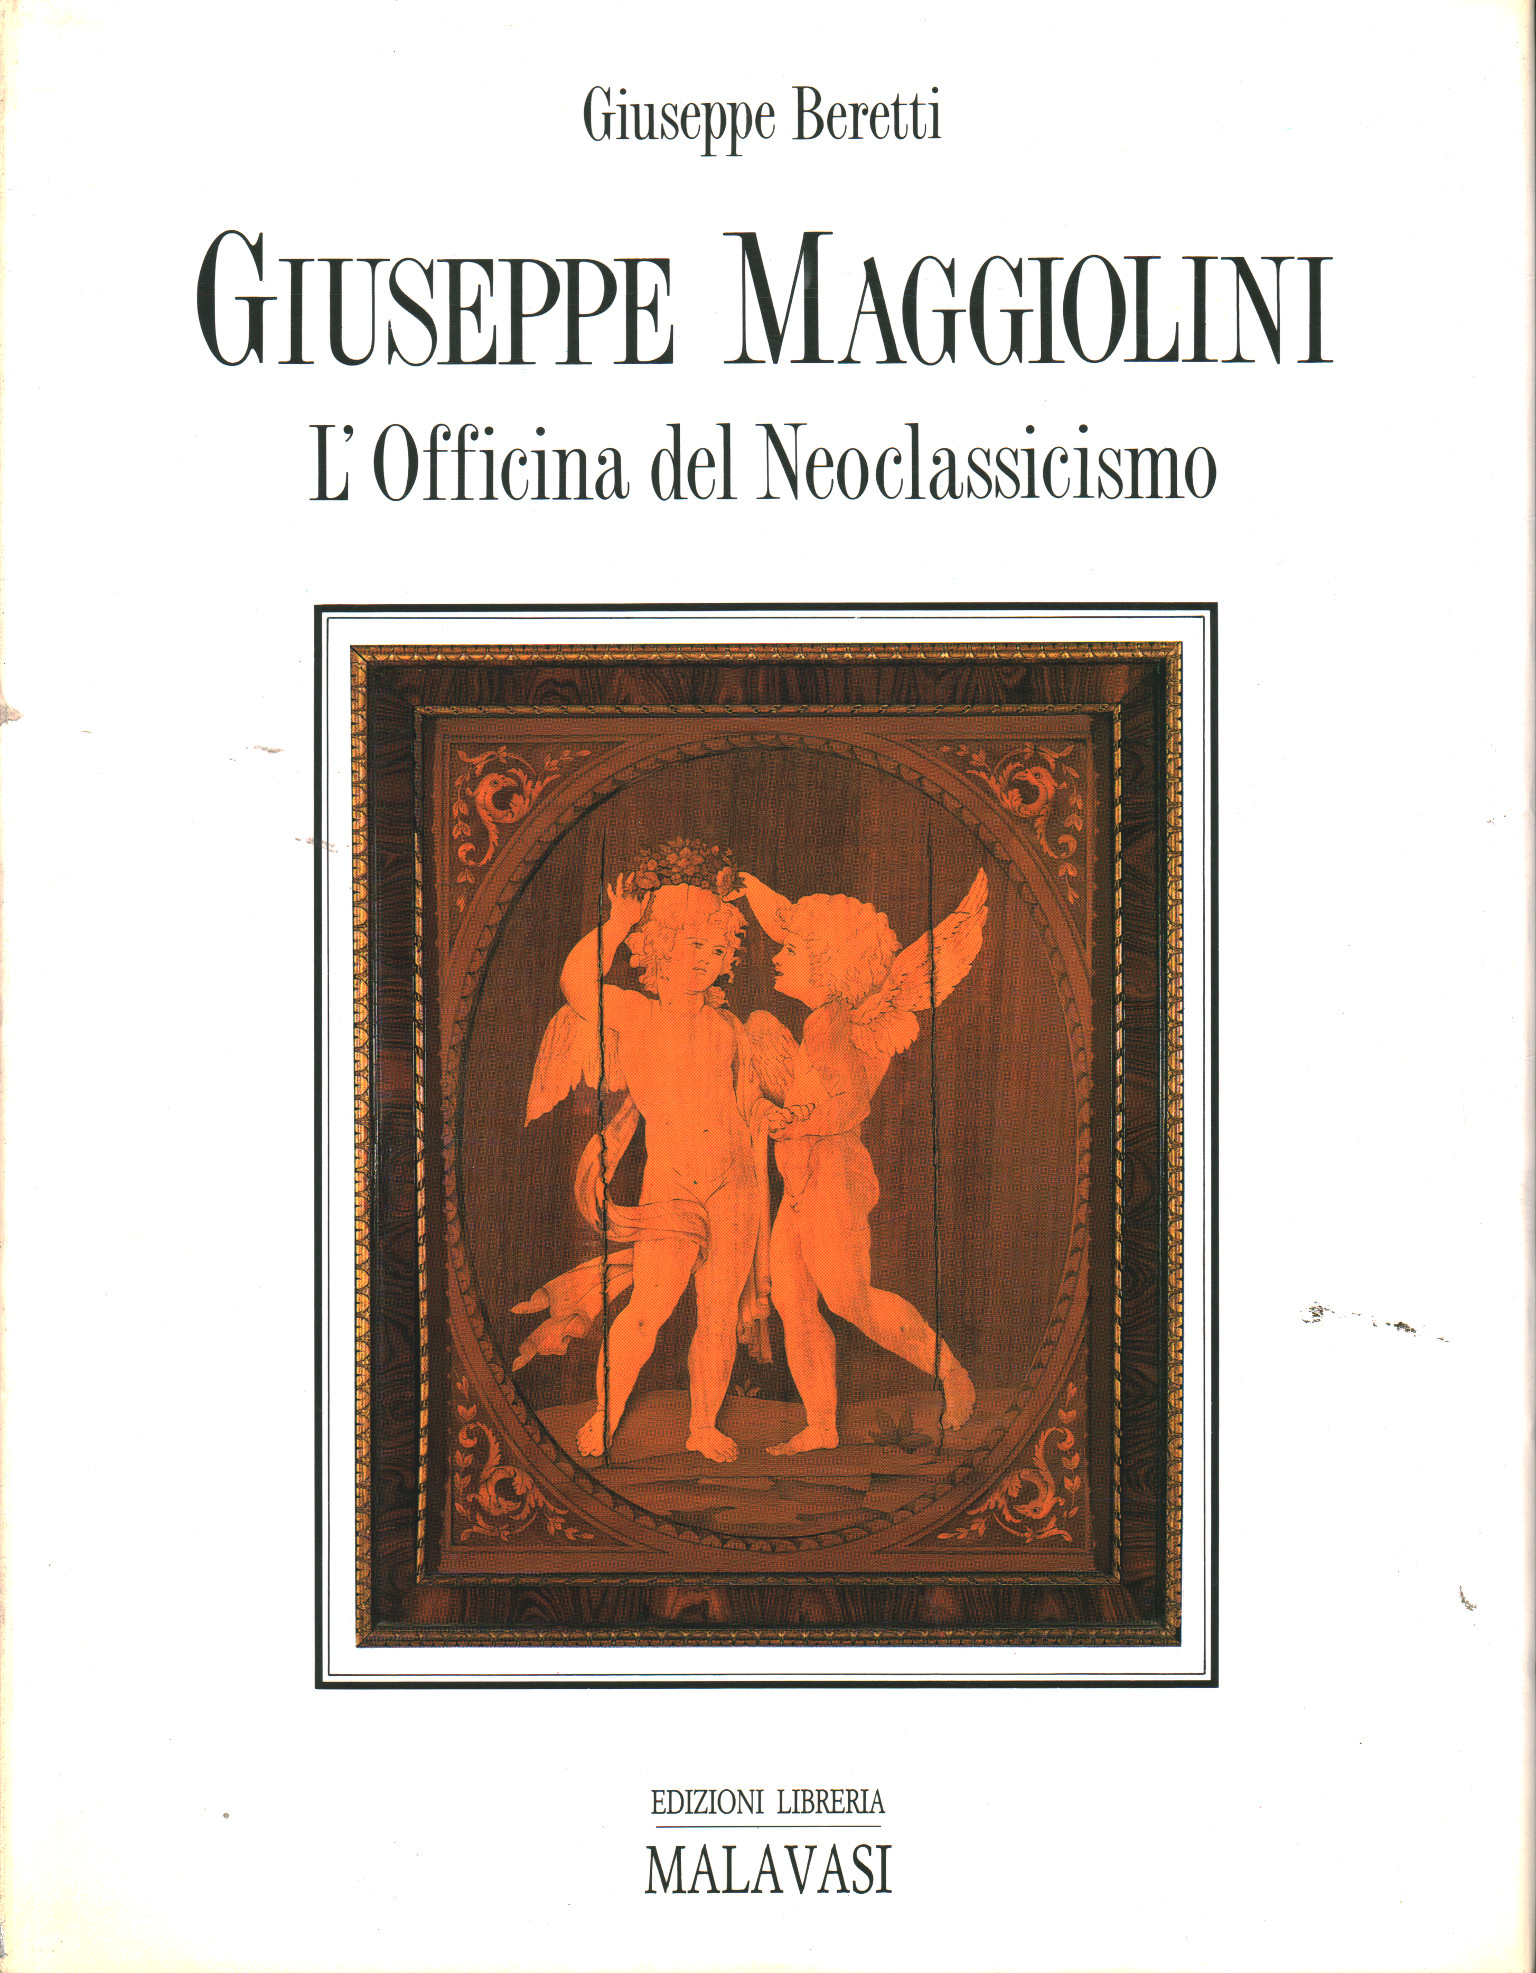 Giuseppe und Carlo Francesco Maggiolini, Giuseppe Beretti